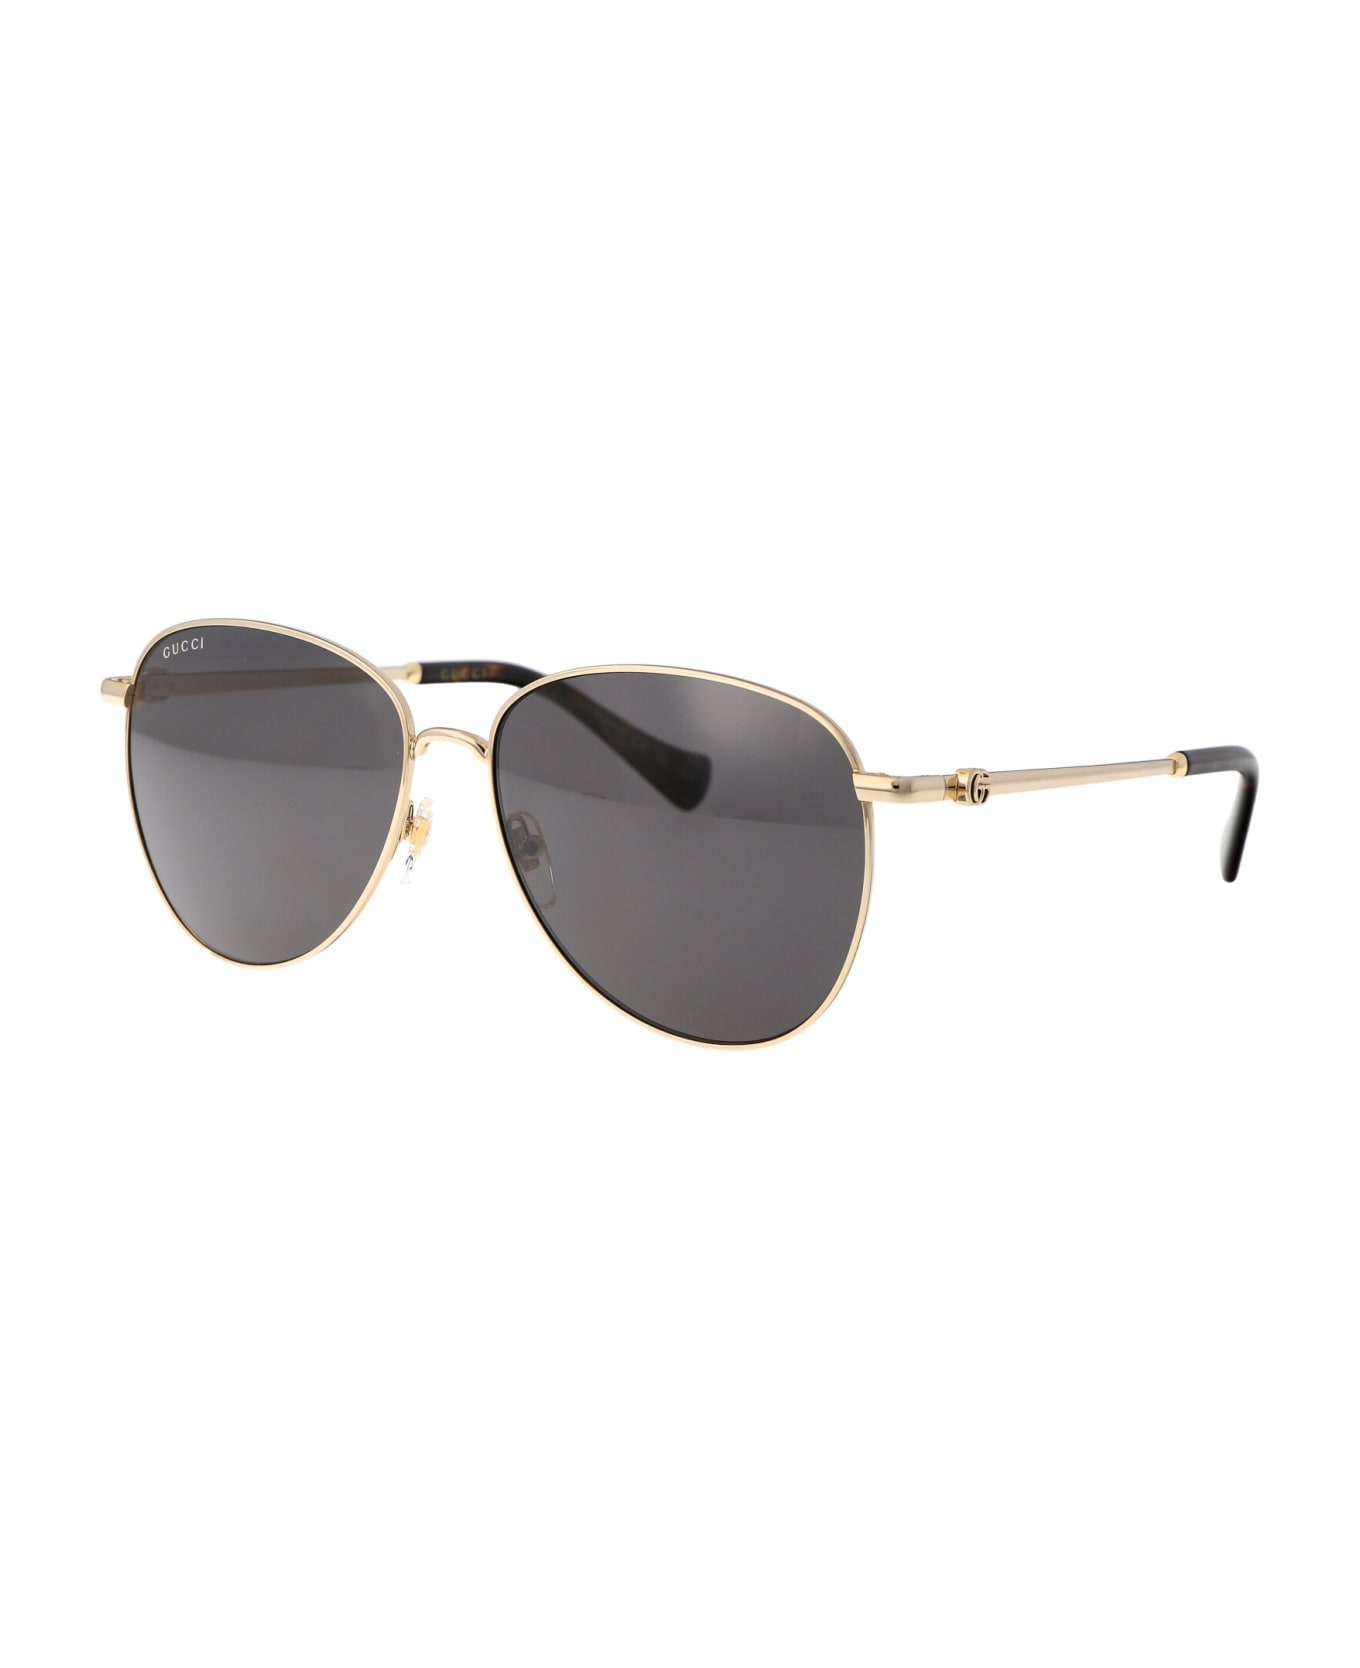 Gucci Eyewear Gg1419s Sunglasses - 001 GOLD GOLD GREY サングラス